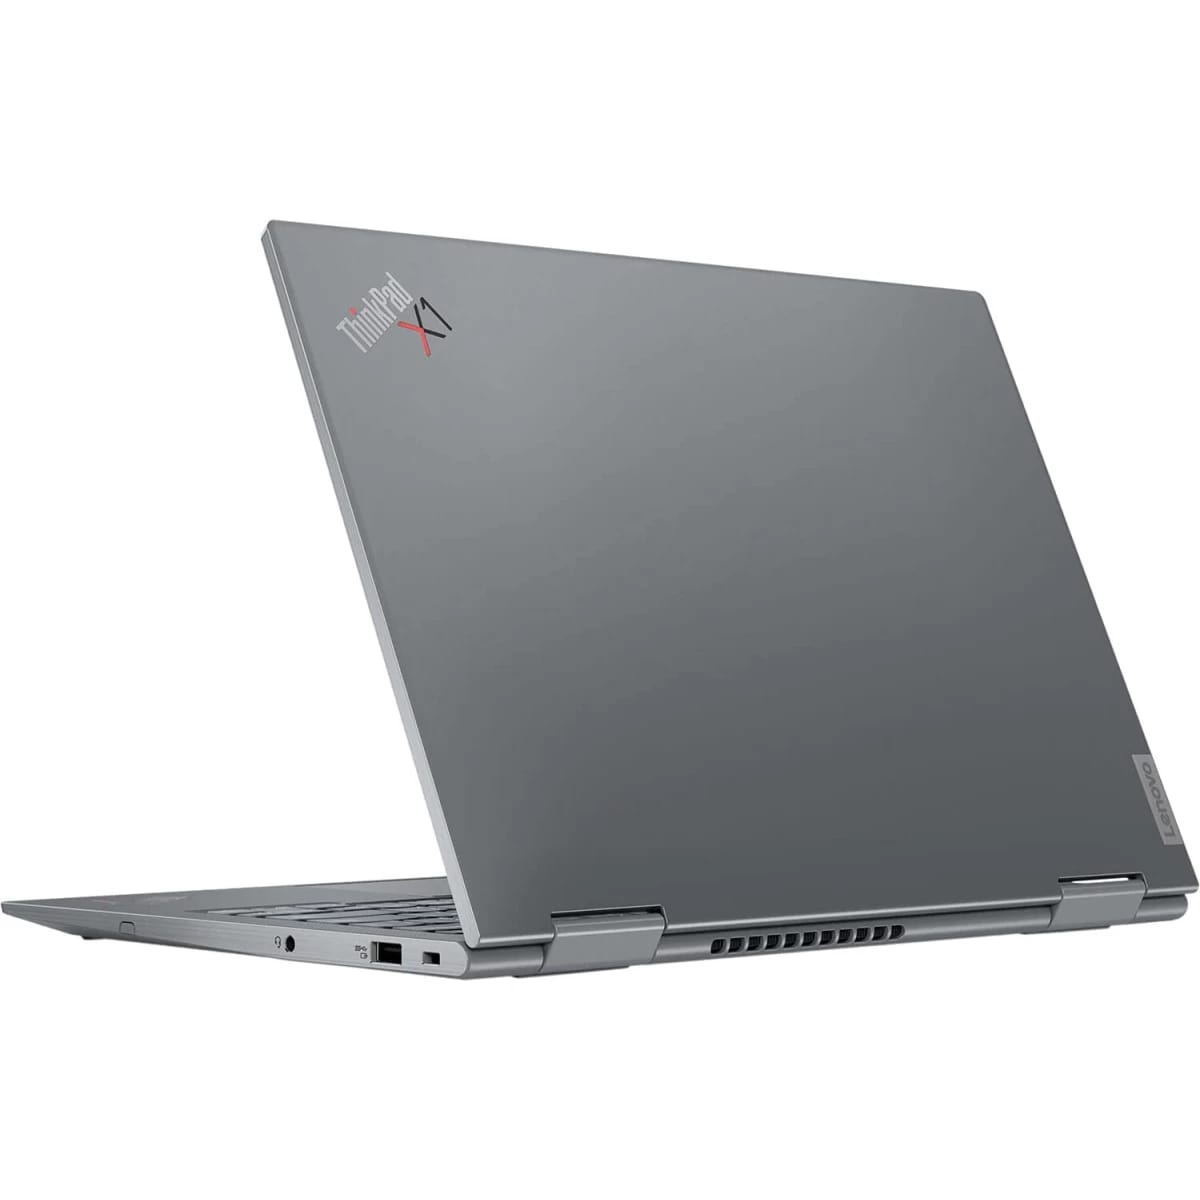 Lenovo ThinkPad X1 YOGA 11Gen Intel Core i5 up to 4.2GHZ 4-Core 8MB Cashe